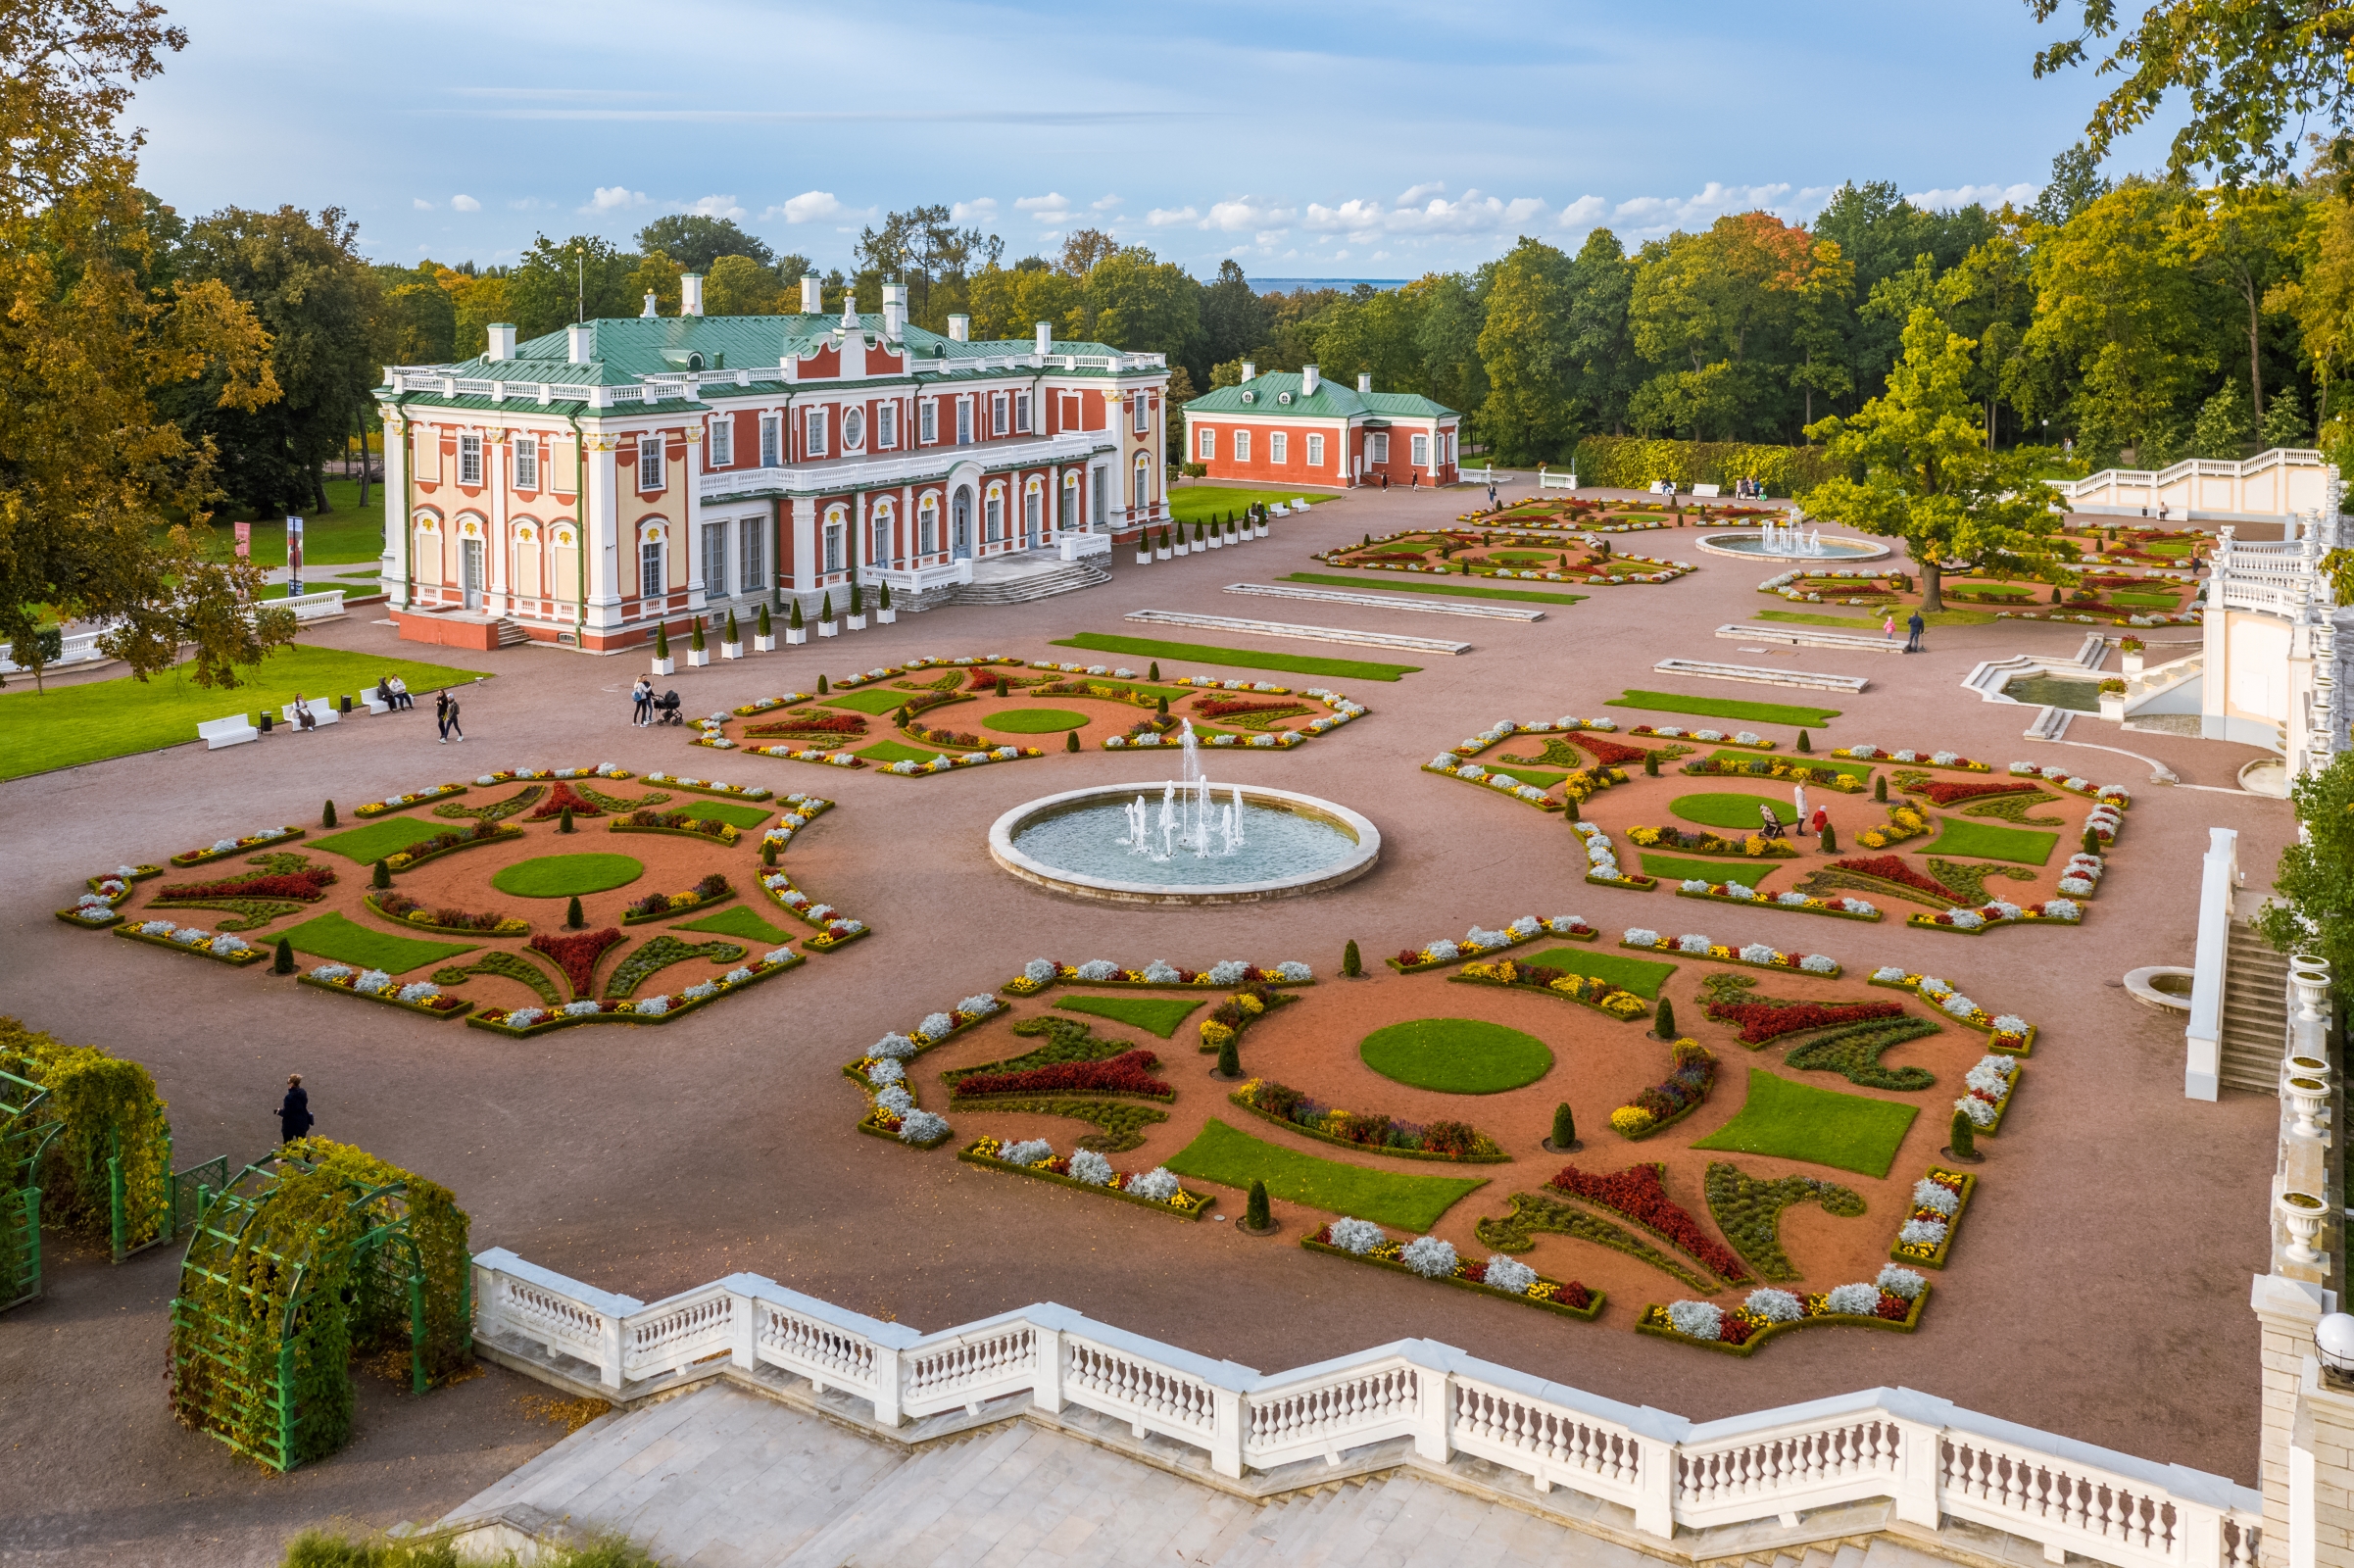 Kadriorg palace and the garden